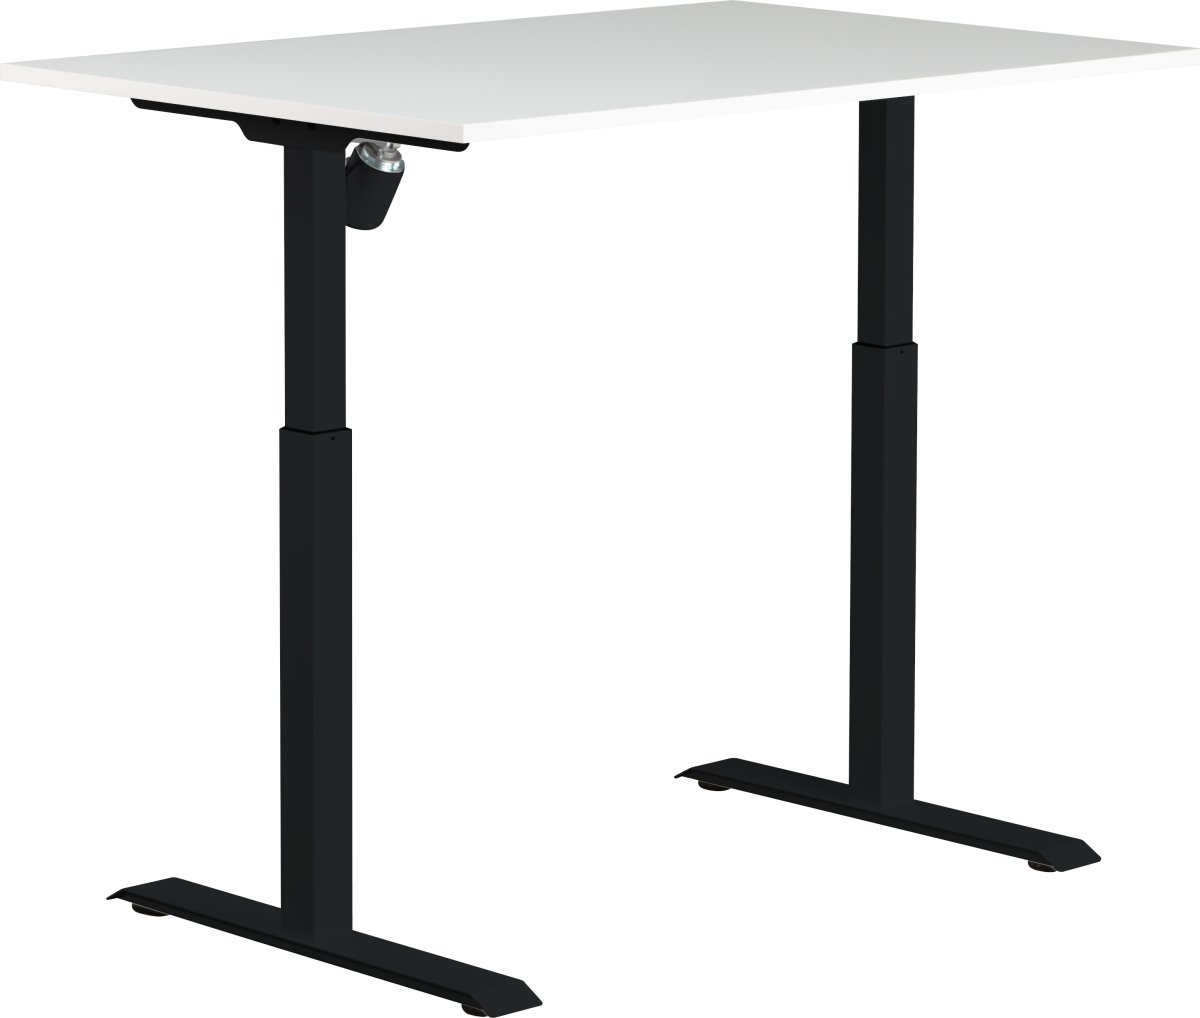 Sun-Flex I höj-& sänkbart bord, 120x80, svart/vit